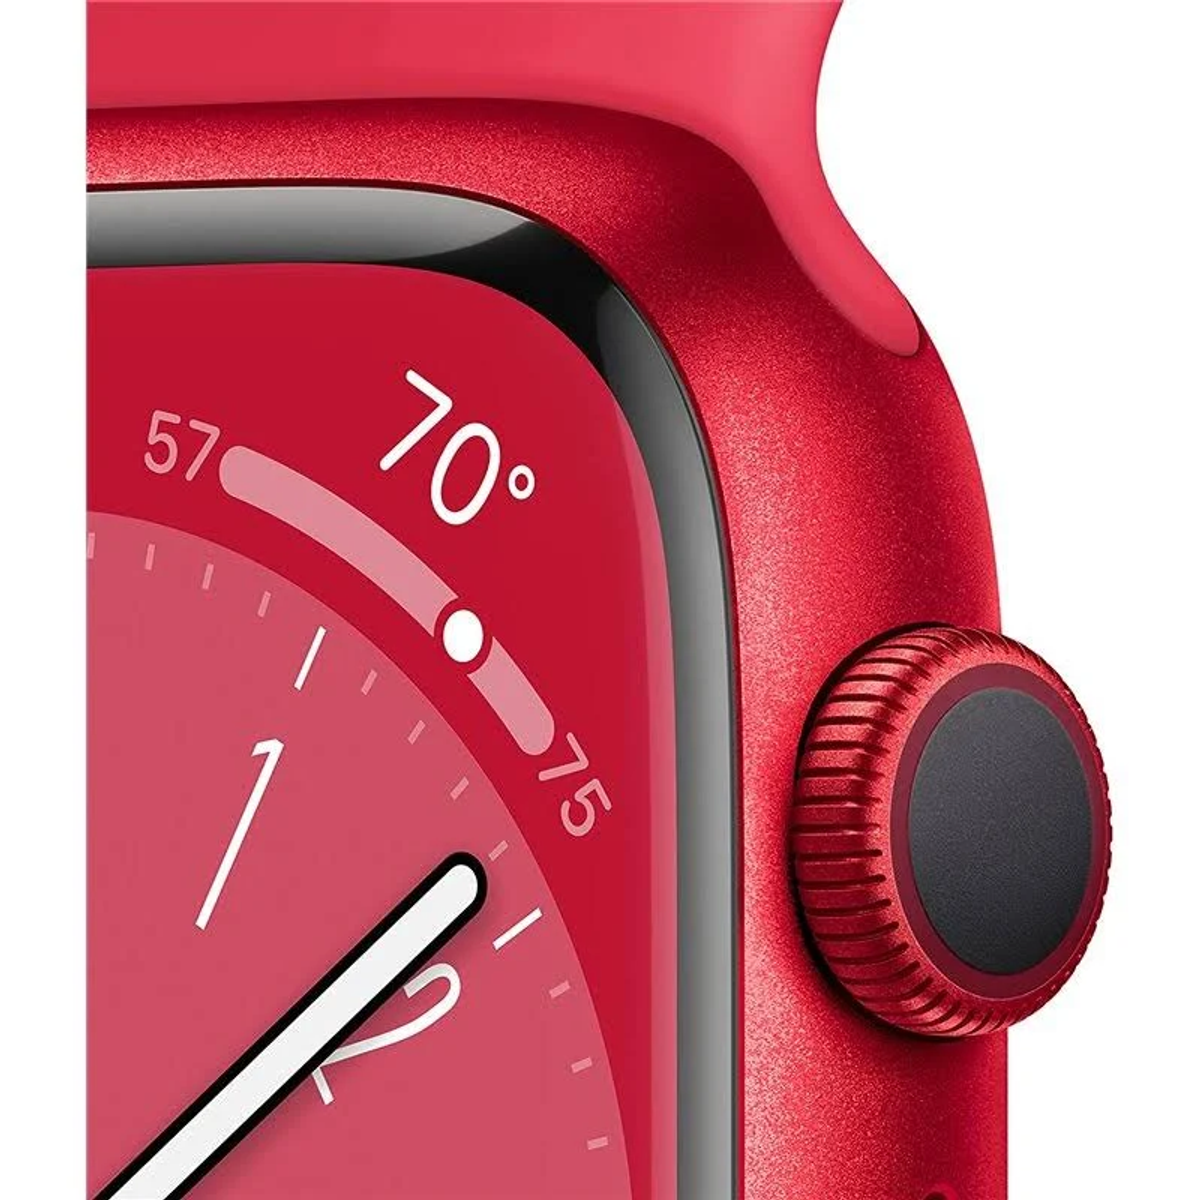 APPLE S8 GPS 41 RED ALU Fluorelastomer, 130 200 Aluminium - SPORT W RED Armband: (PRODUCT)RED, Gehäuse: (PRODUCT)RED REG mm, Smartwatch